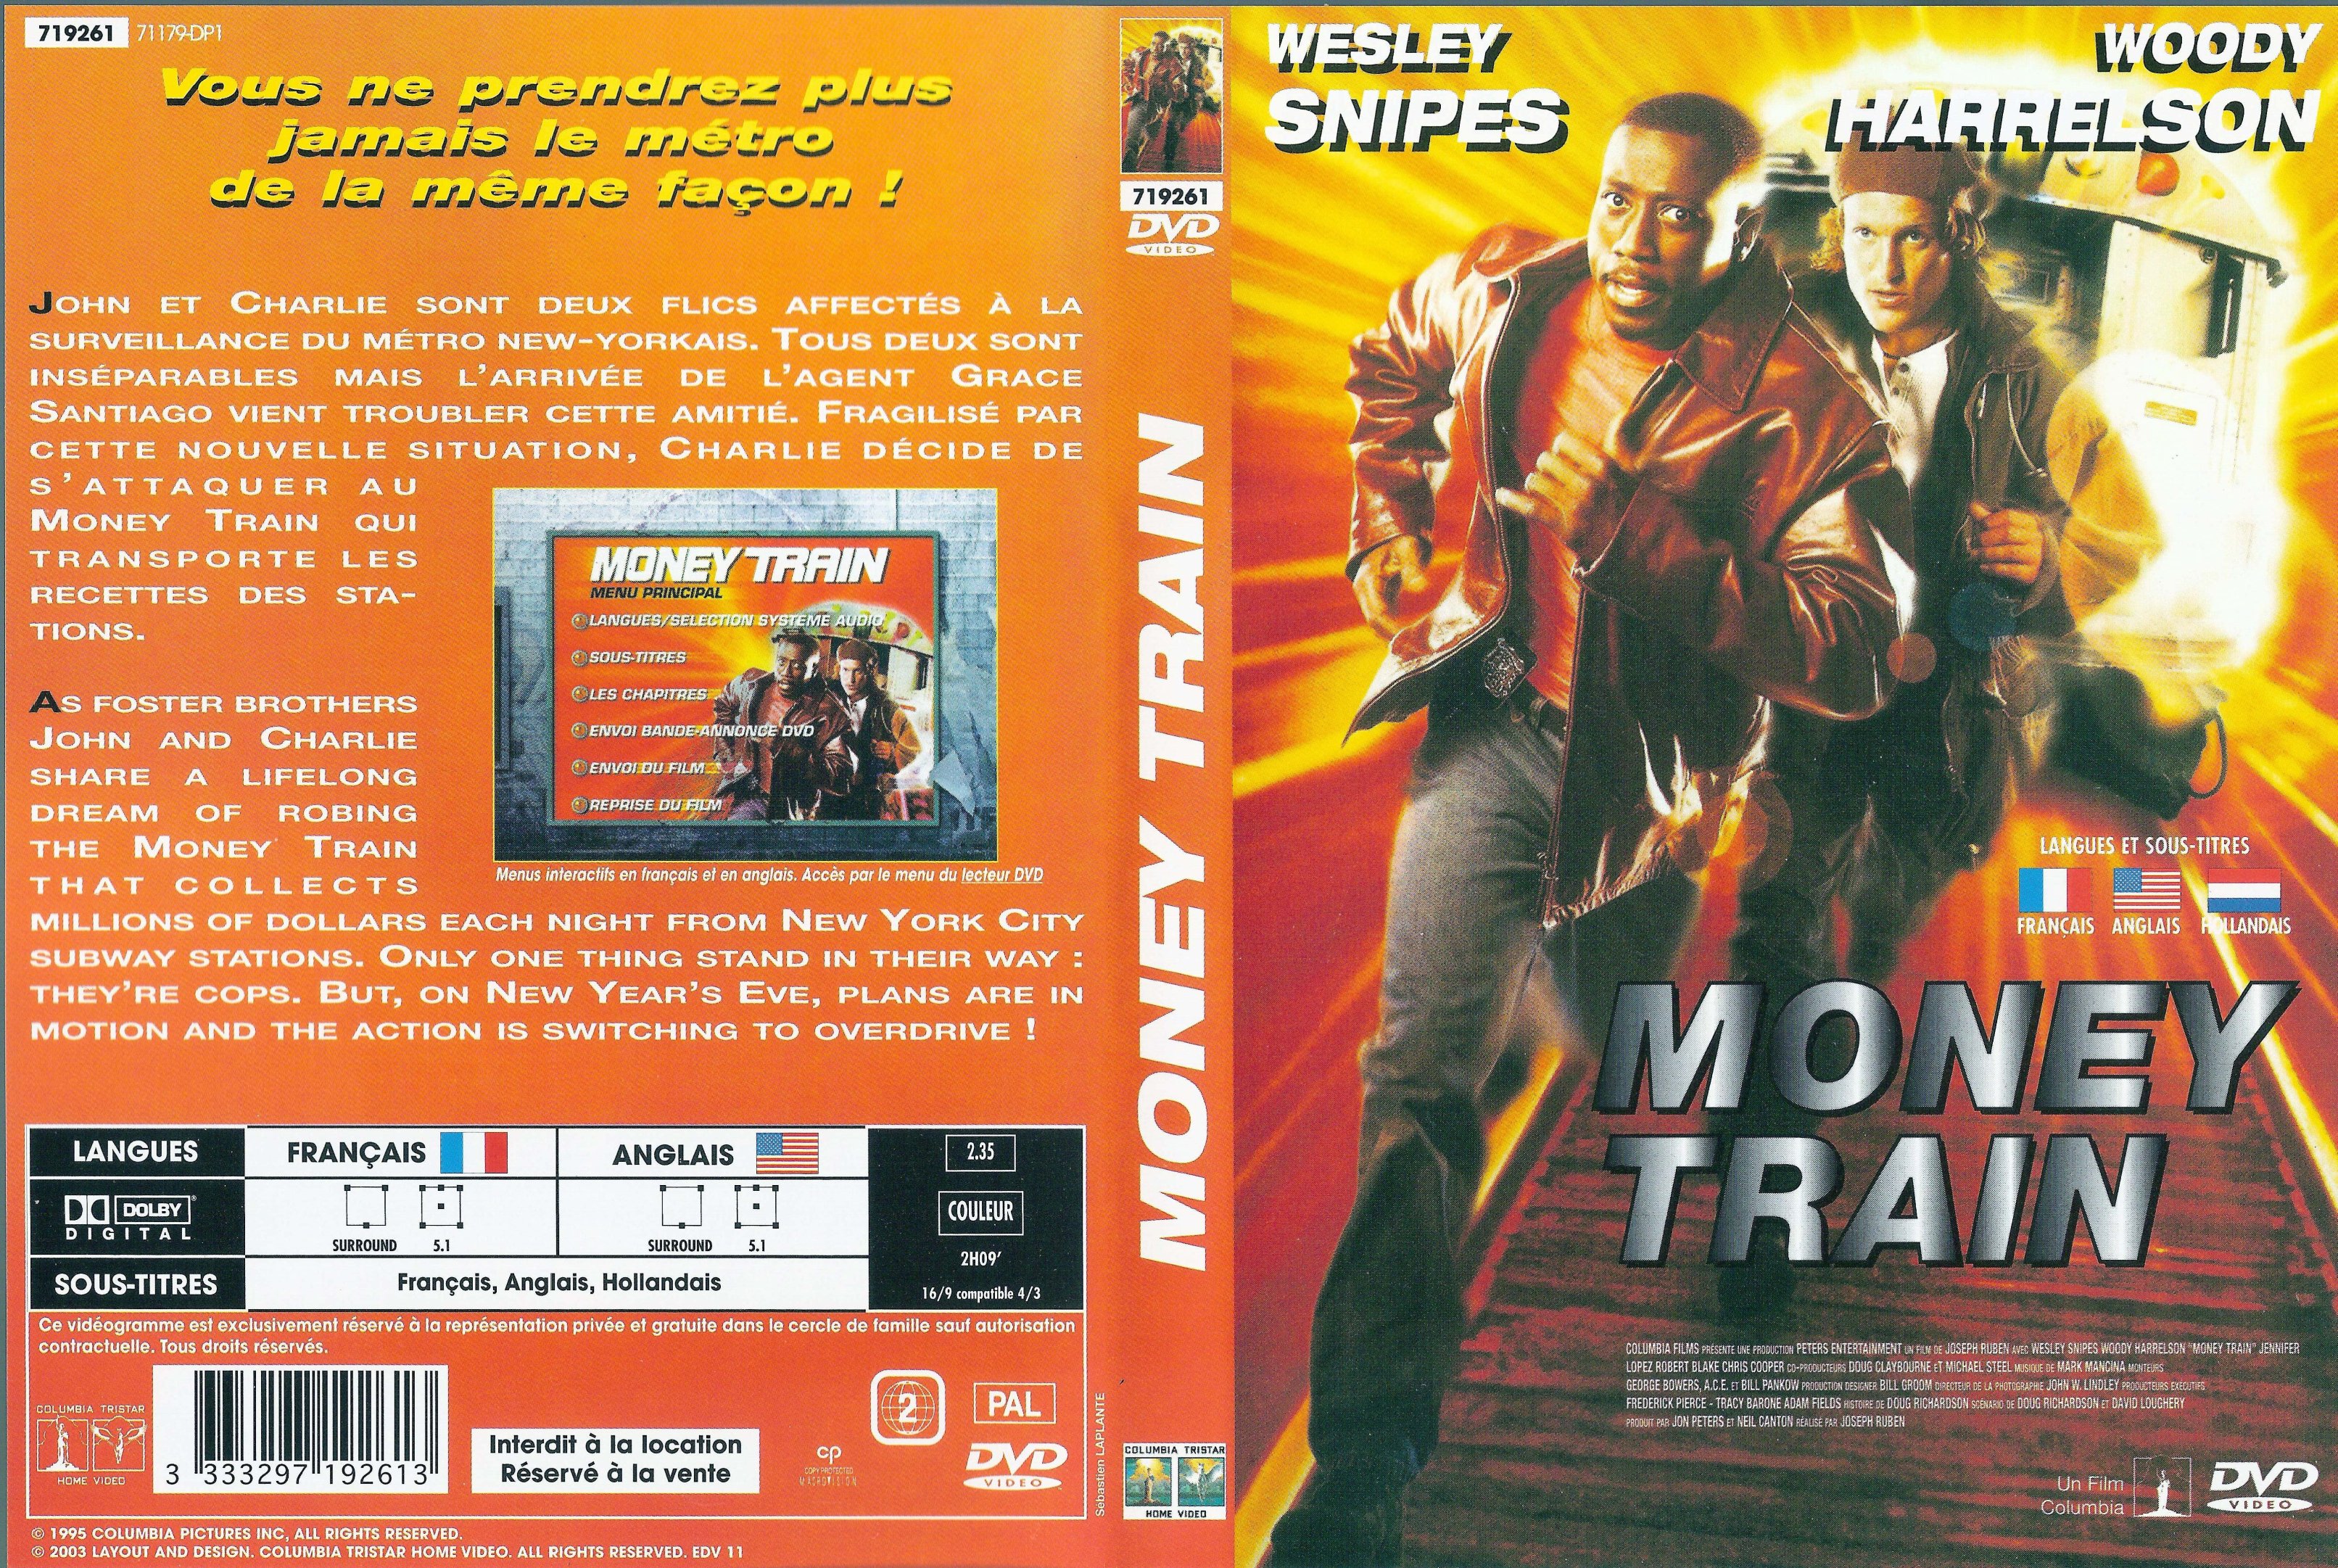 Jaquette DVD Money train v2